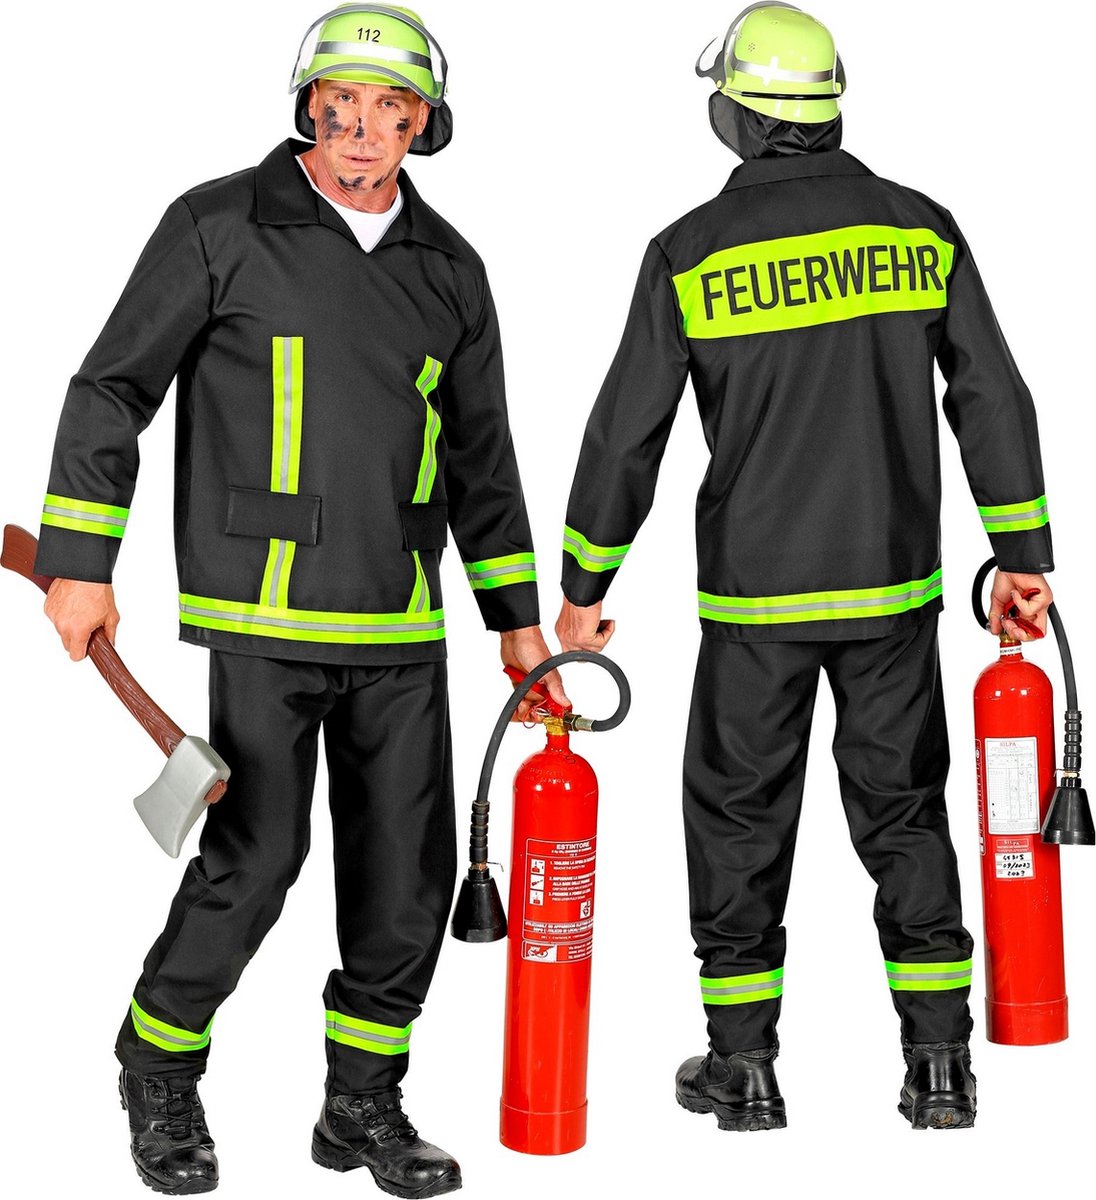 Widmann - Brandweer Kostuum - Brandweerman Feuerwehr Huizenhoge Vlammen Kostuum - Geel, Zwart - Large - Carnavalskleding - Verkleedkleding